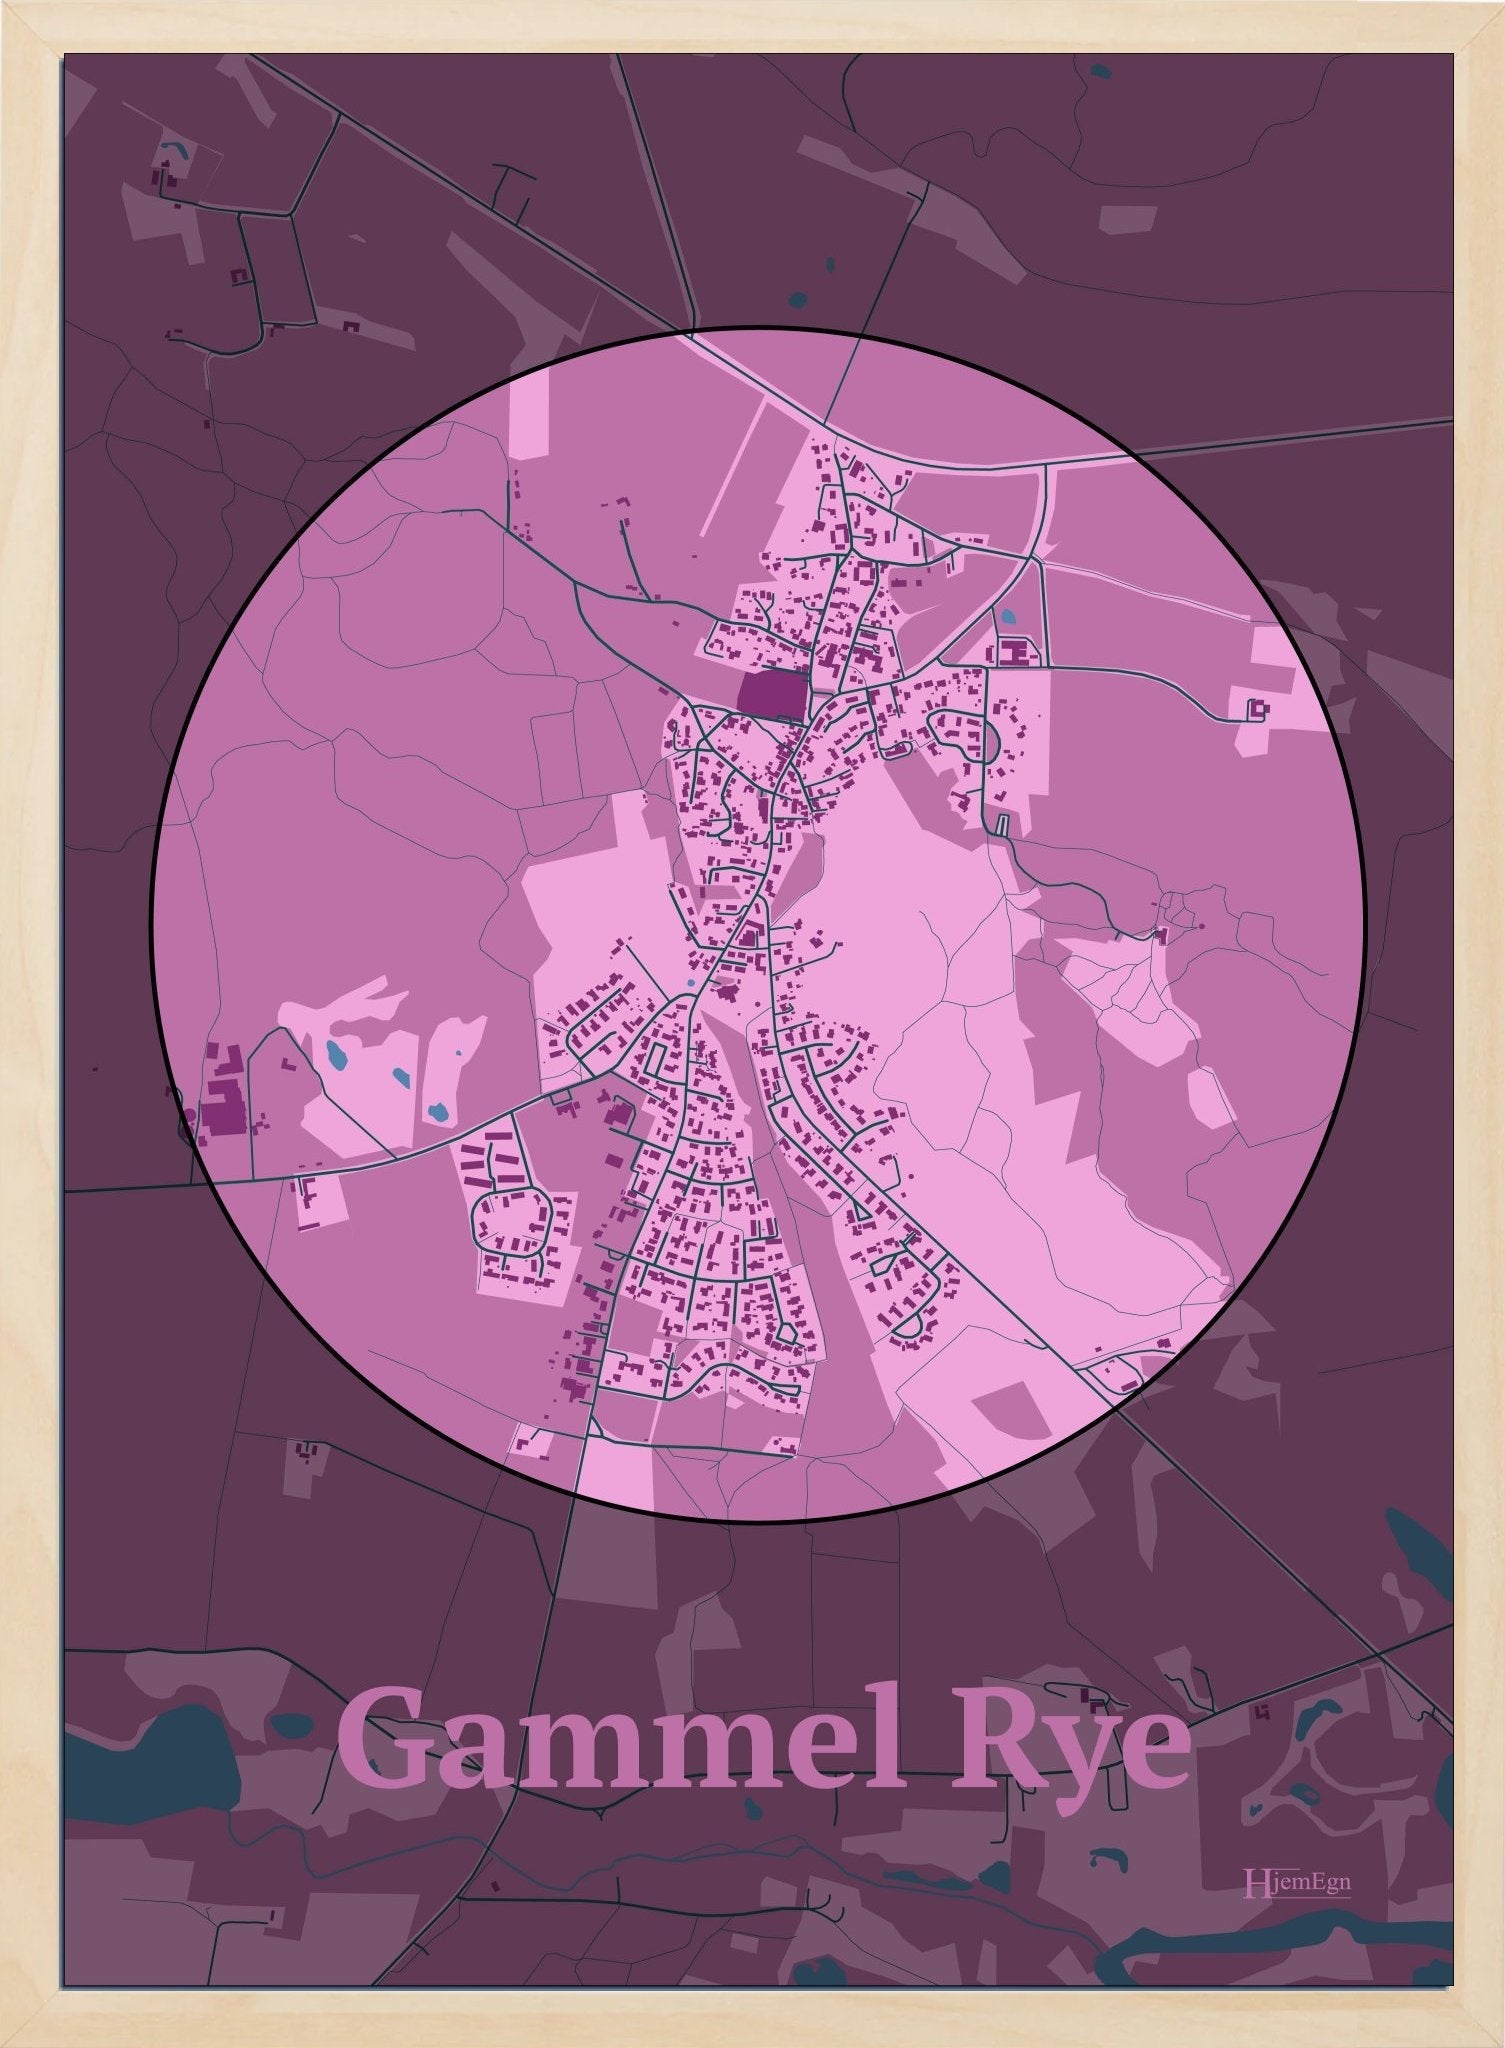 Gammel Rye plakat i farve pastel rød og HjemEgn.dk design centrum. Design bykort for Gammel Rye